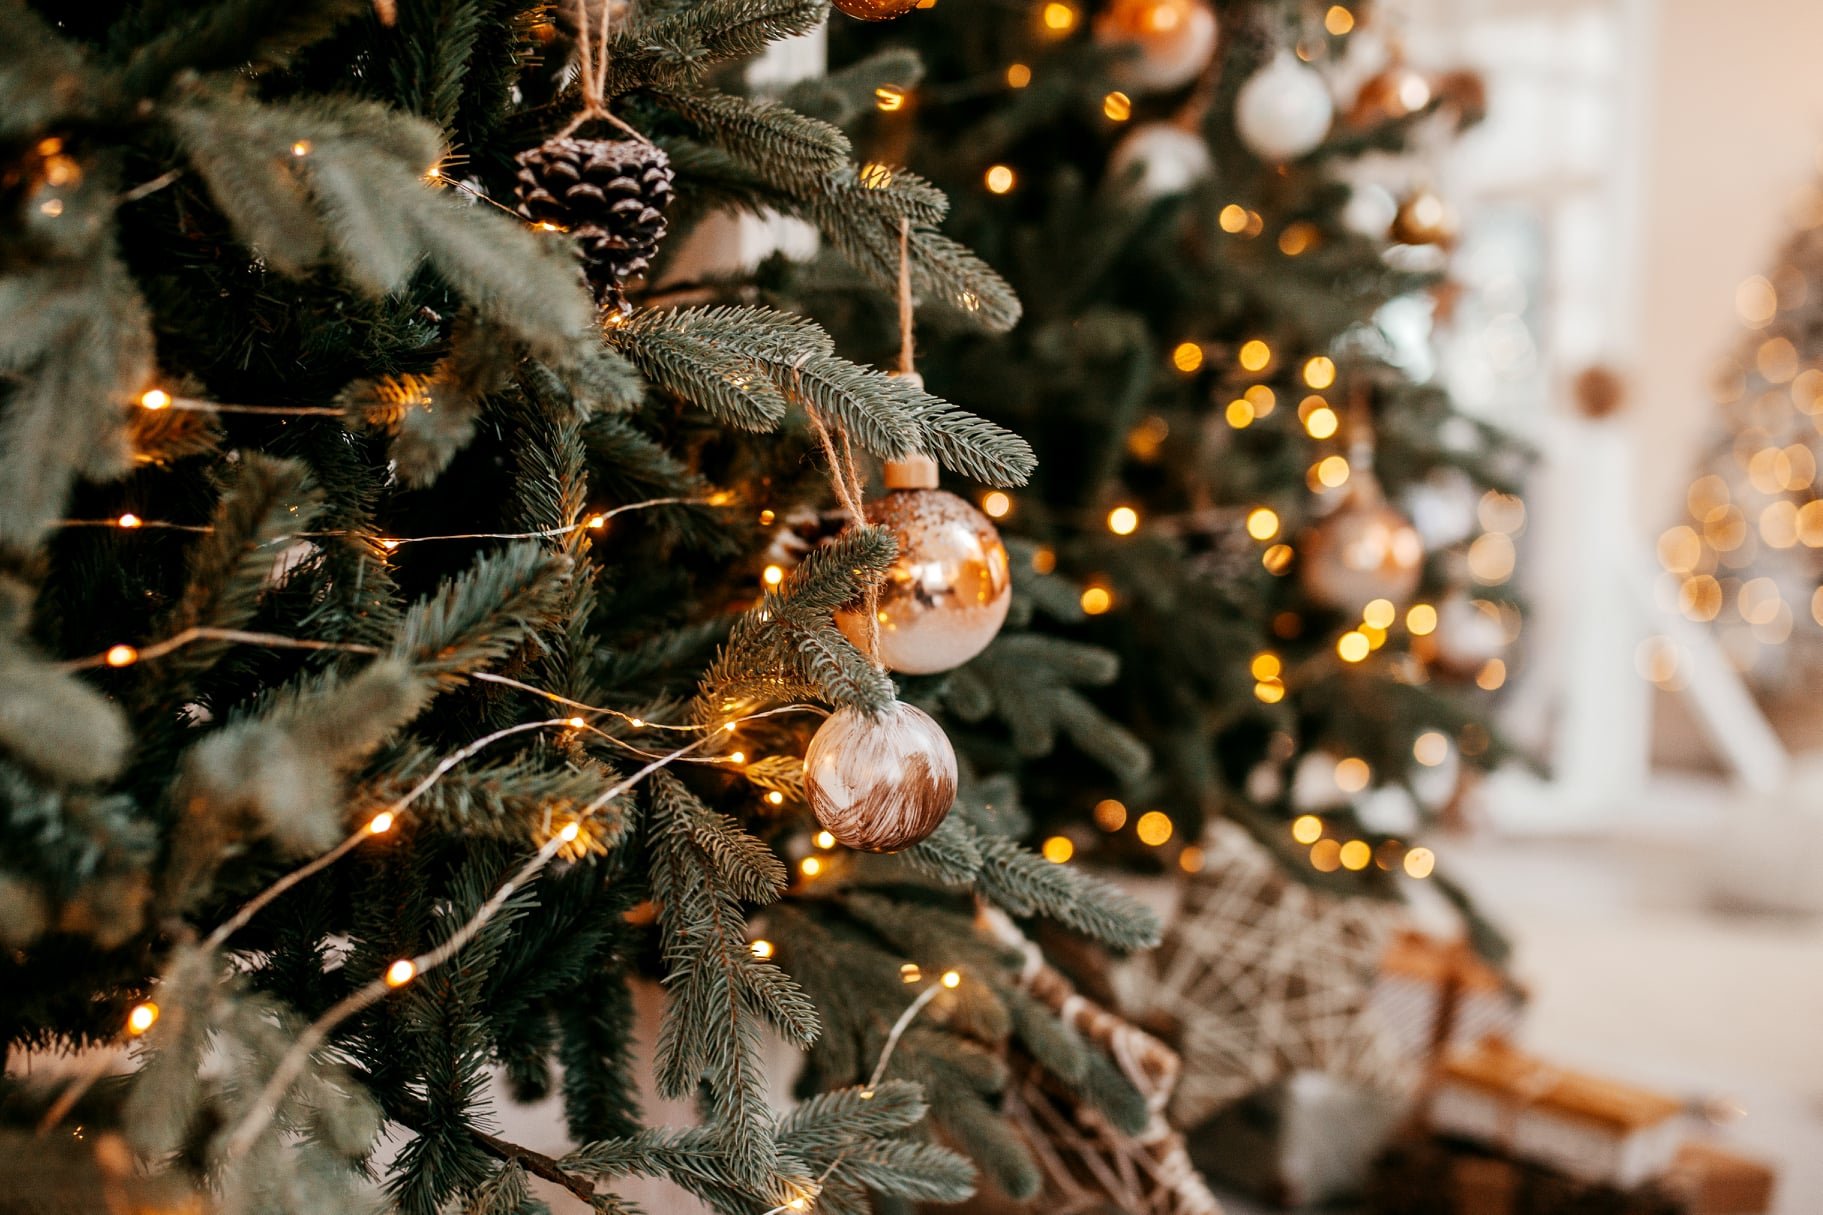 Omislite si pravo naravno košato božično drevo